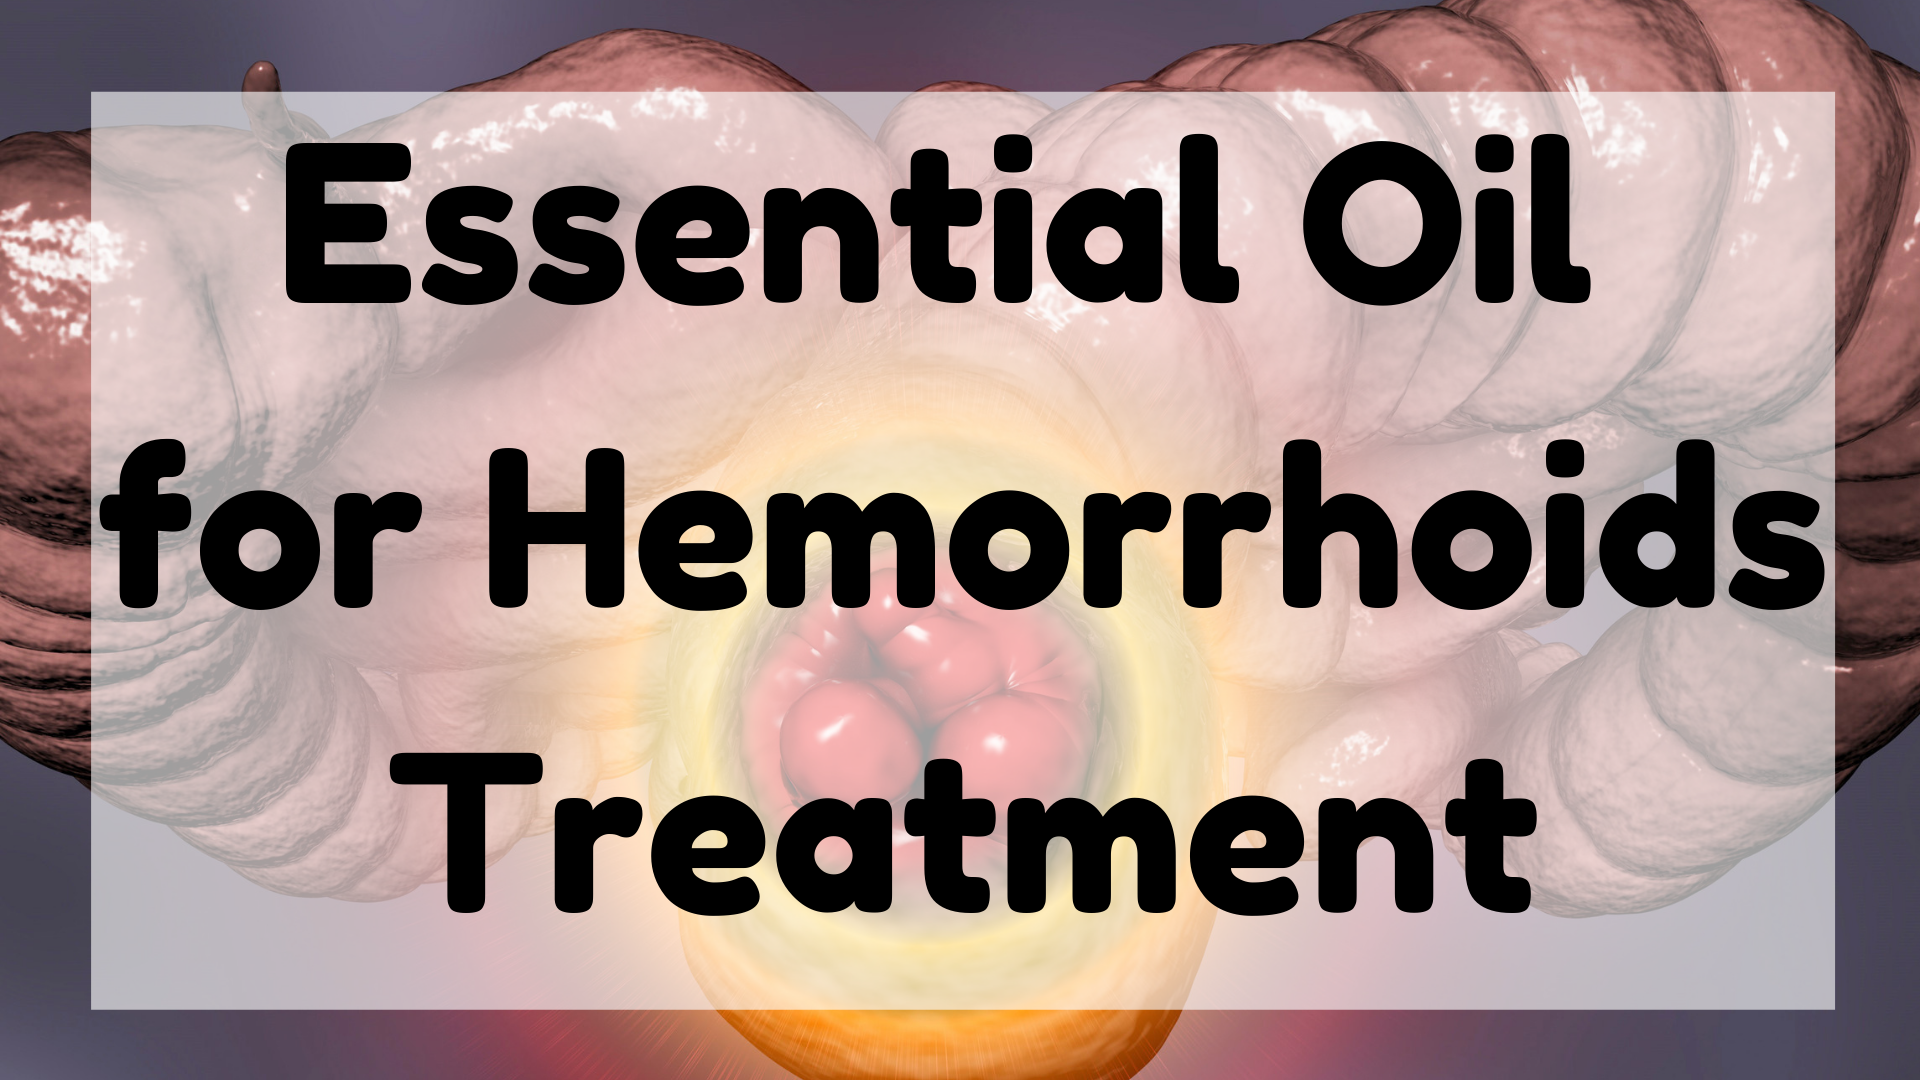 Essential Oil For Hemorrhoids Treatment